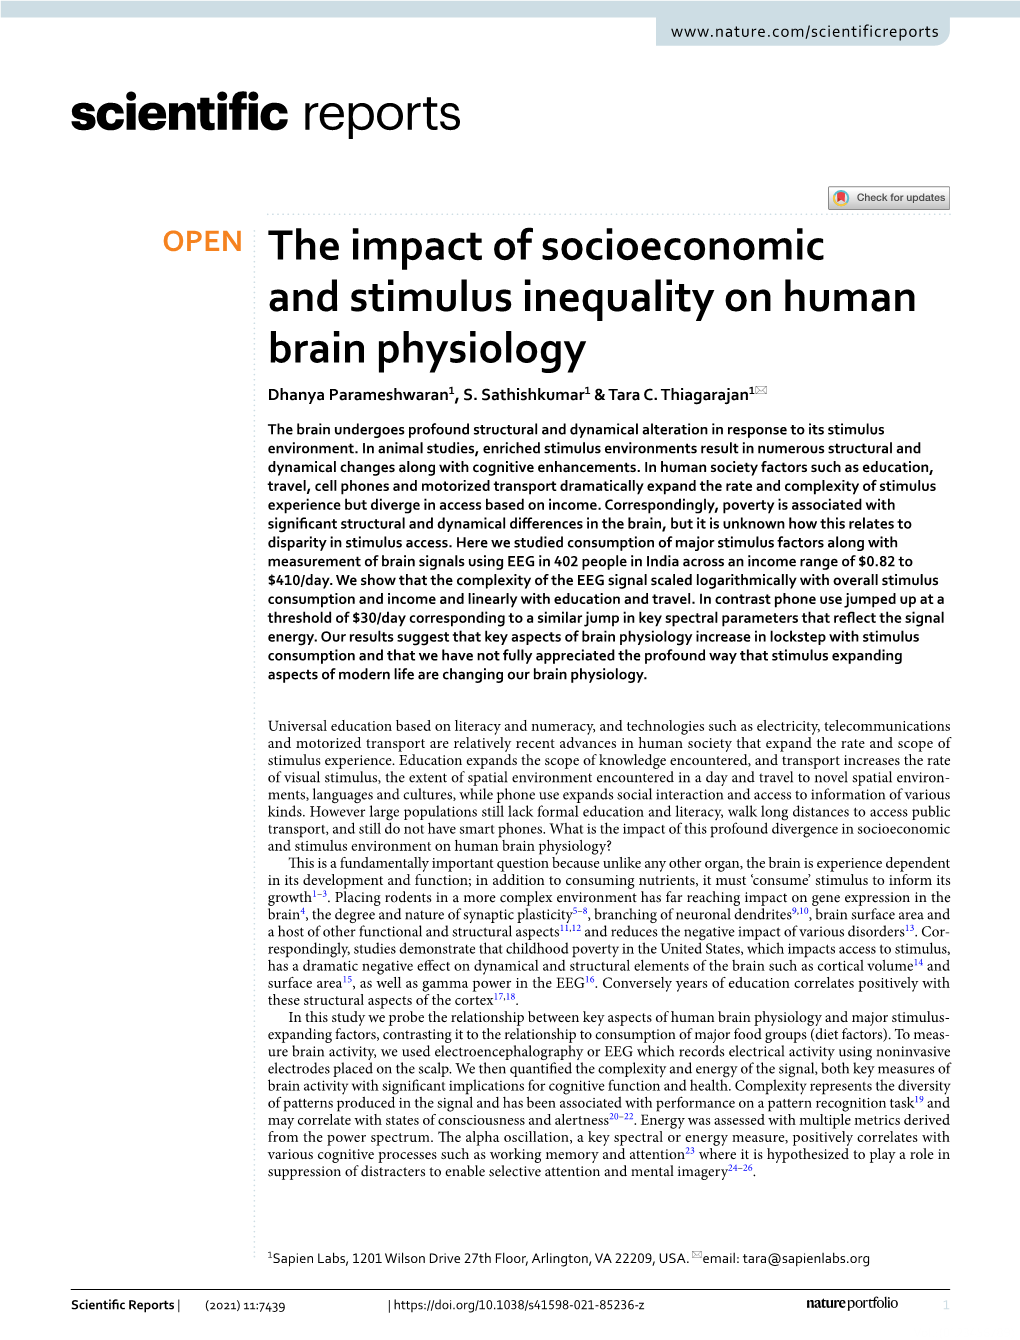 The Impact of Socioeconomic and Stimulus Inequality on Human Brain Physiology Dhanya Parameshwaran1, S